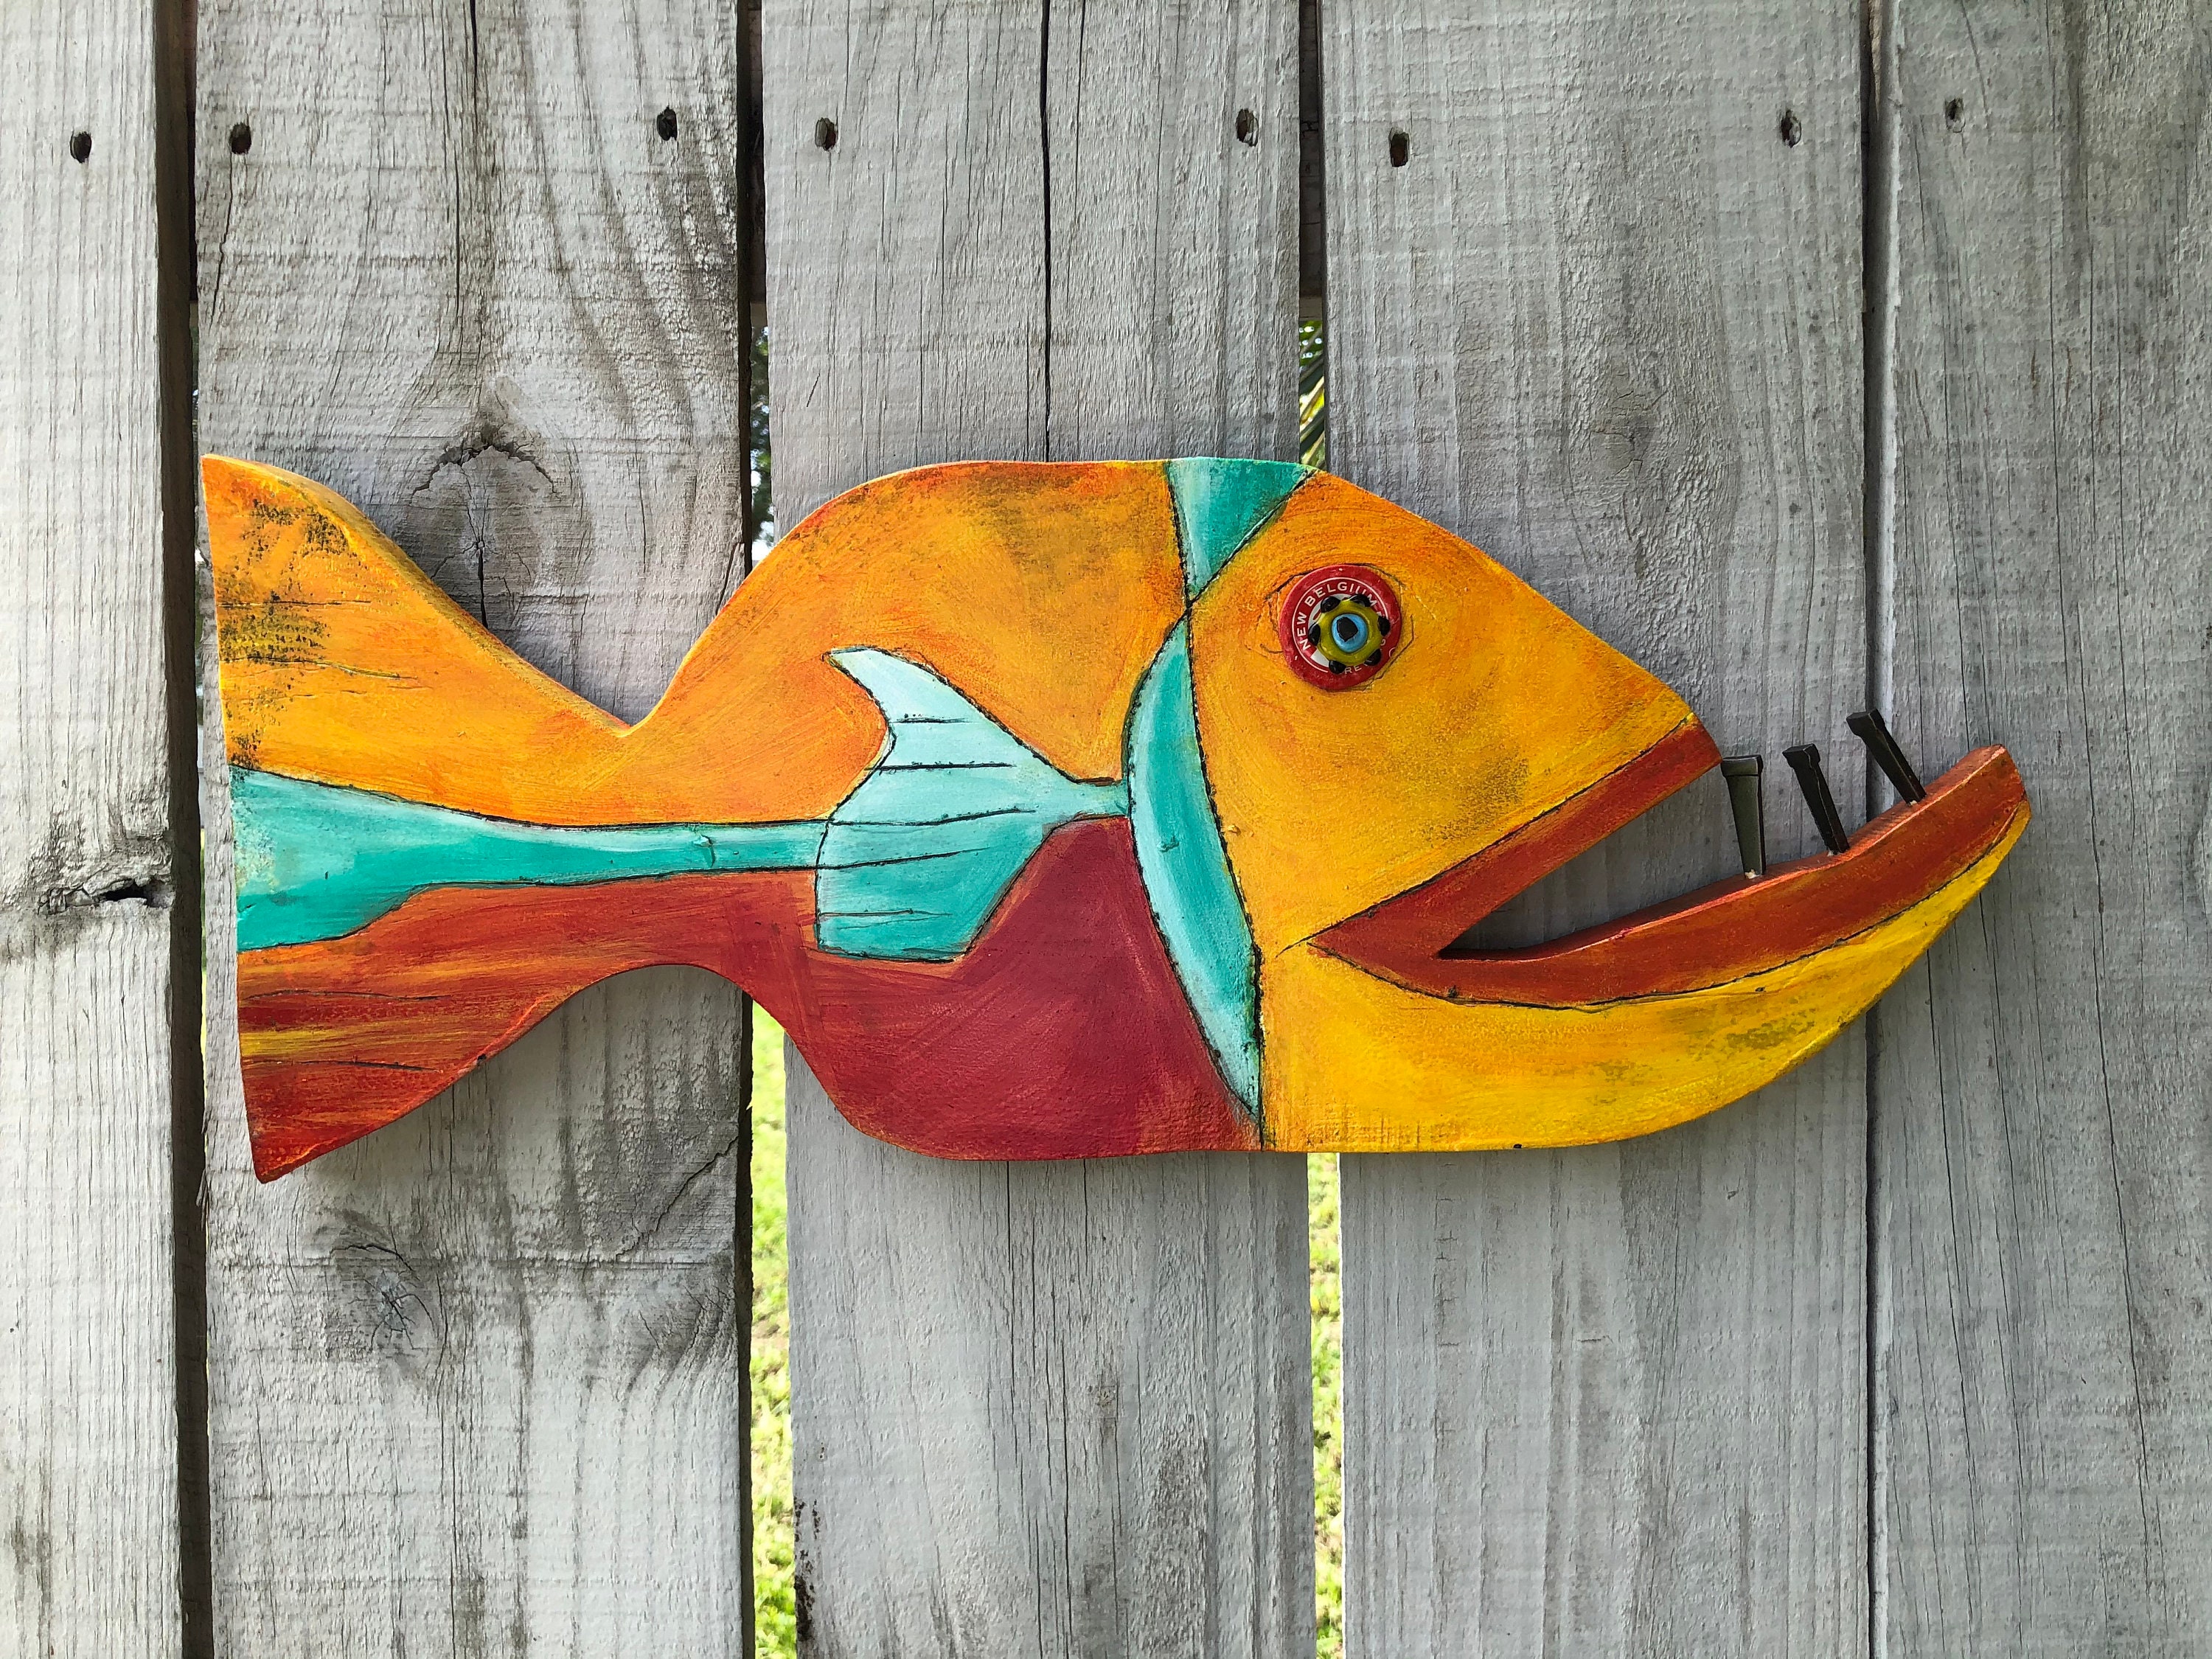 Wooden Fish, Painted Fish, Painted Wooden Fish, Fish Wall Decor, Wood Fish,  Fish Wall Hanging, Fish Art, Fishing, Fisherman Gift, Fish Gift 